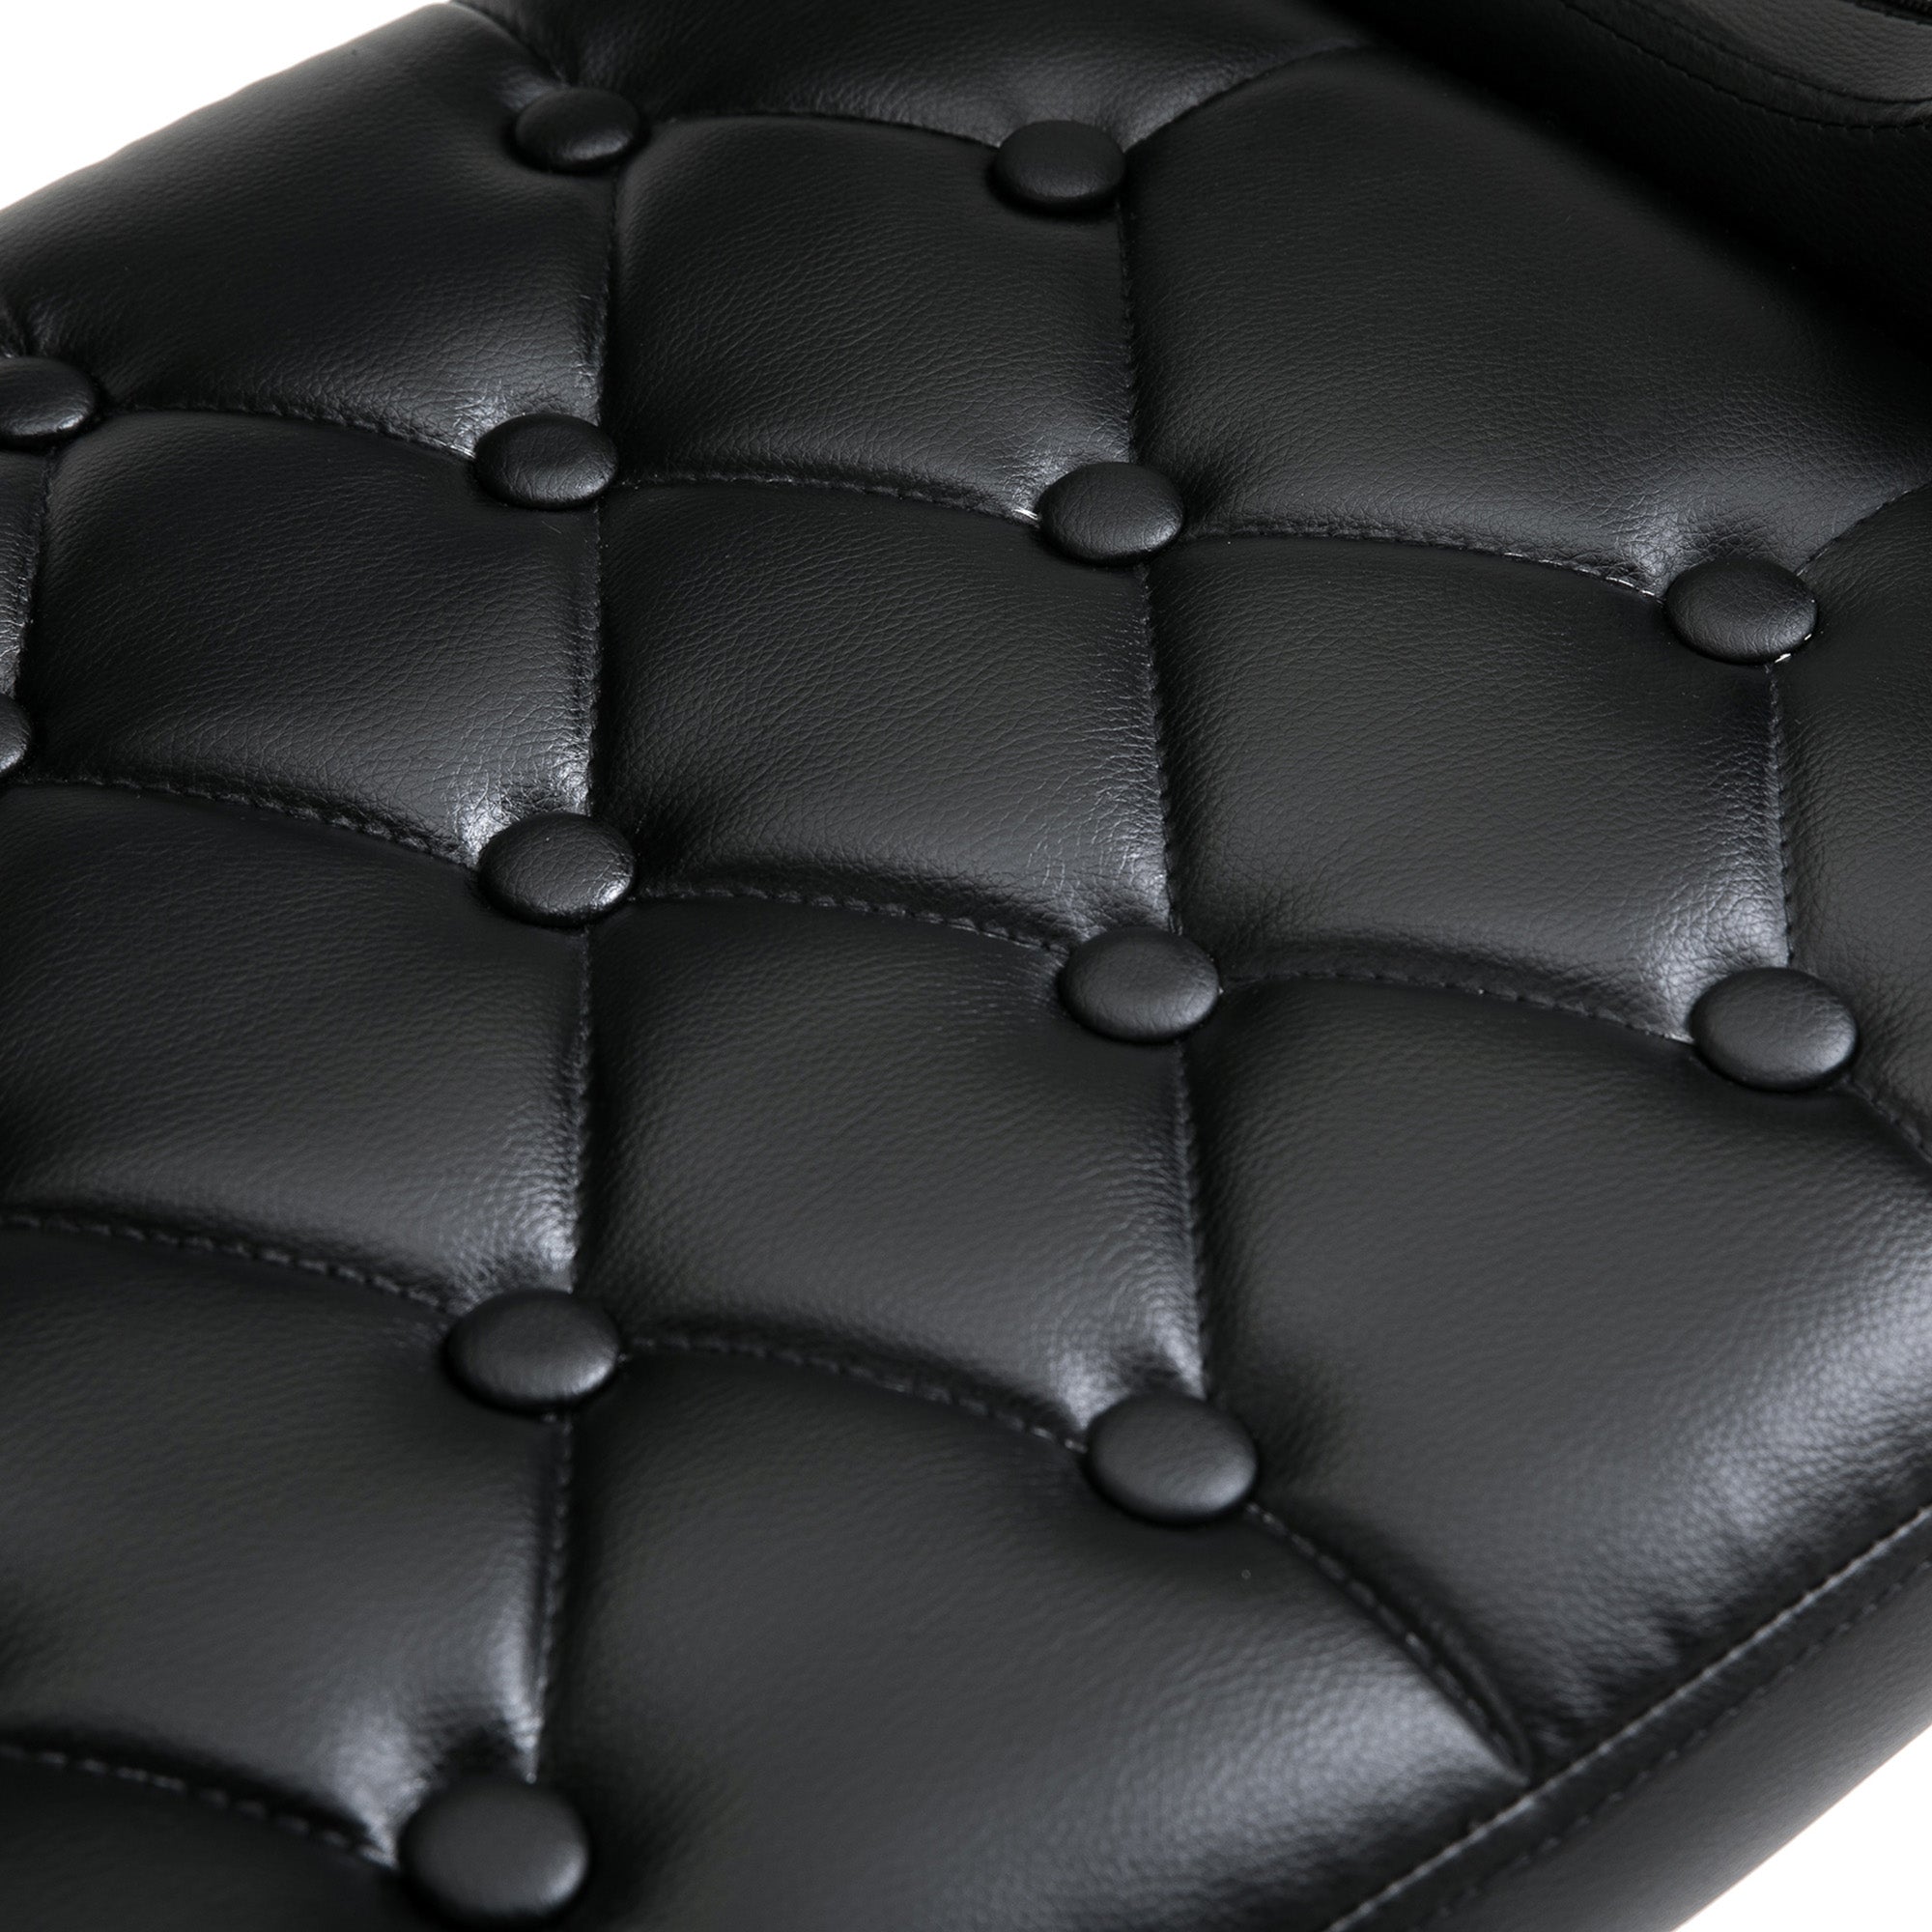 PU Leather Upholstered Swivel Bar Stool, Height Adjustable Barstool with Back, Armrest, Footrest for Kitchen  AOSOM   